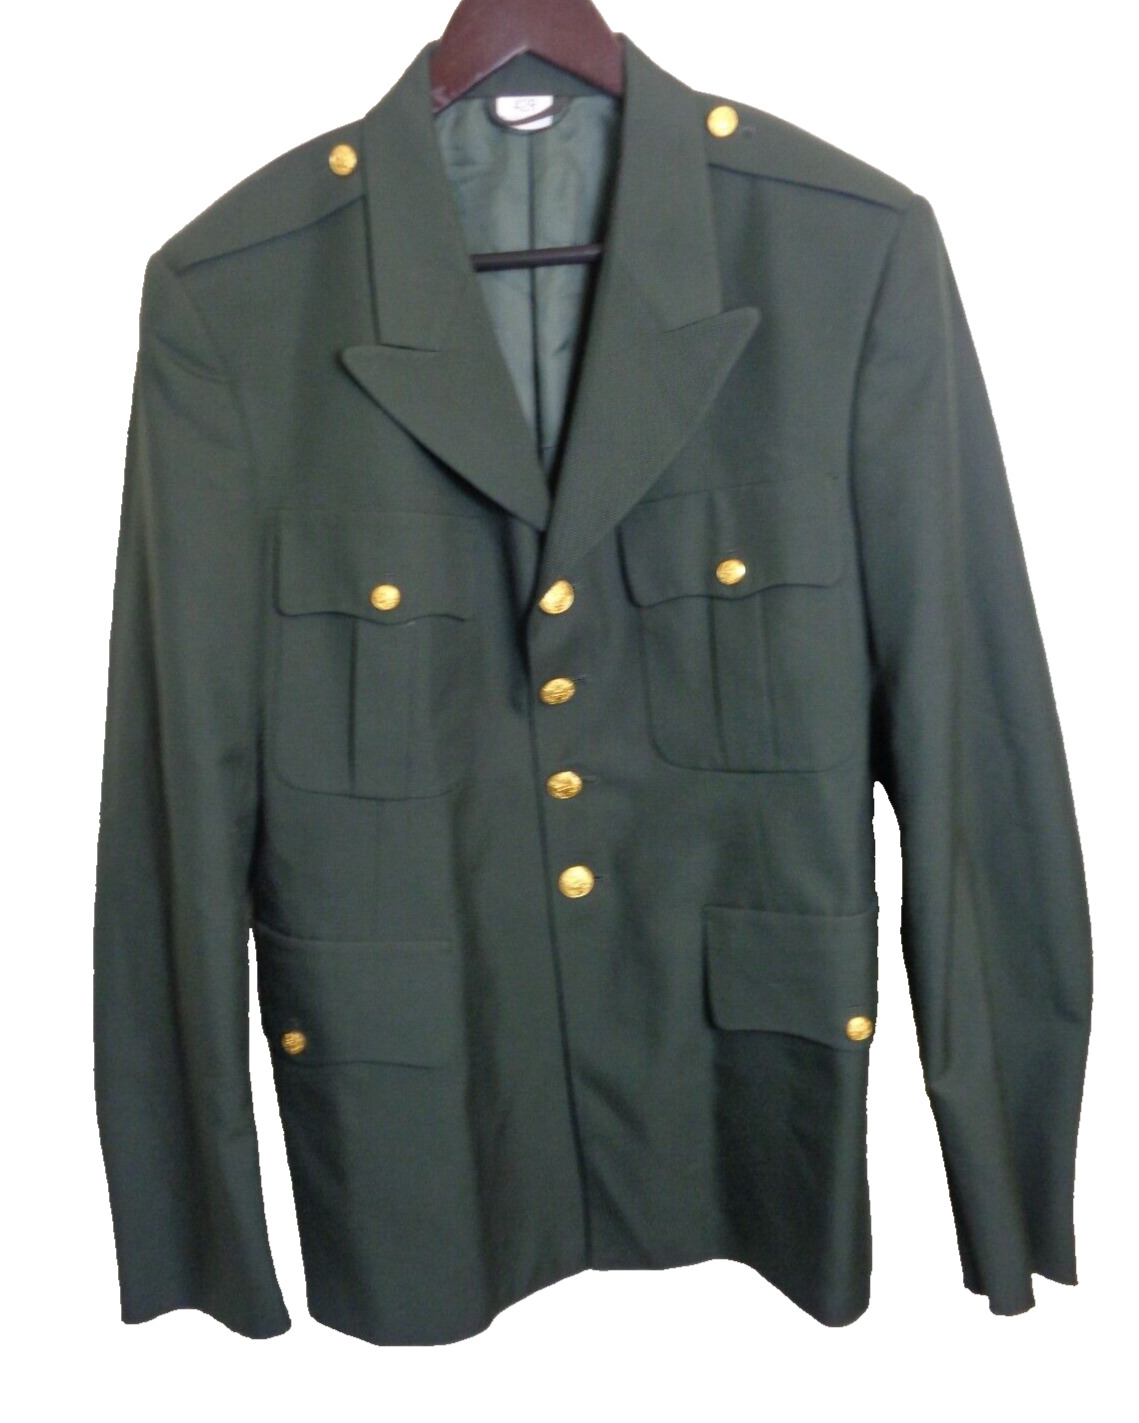 US Military Army Green Coat 42R Poly/Wool Blazer Jacket Uniform Men\'s